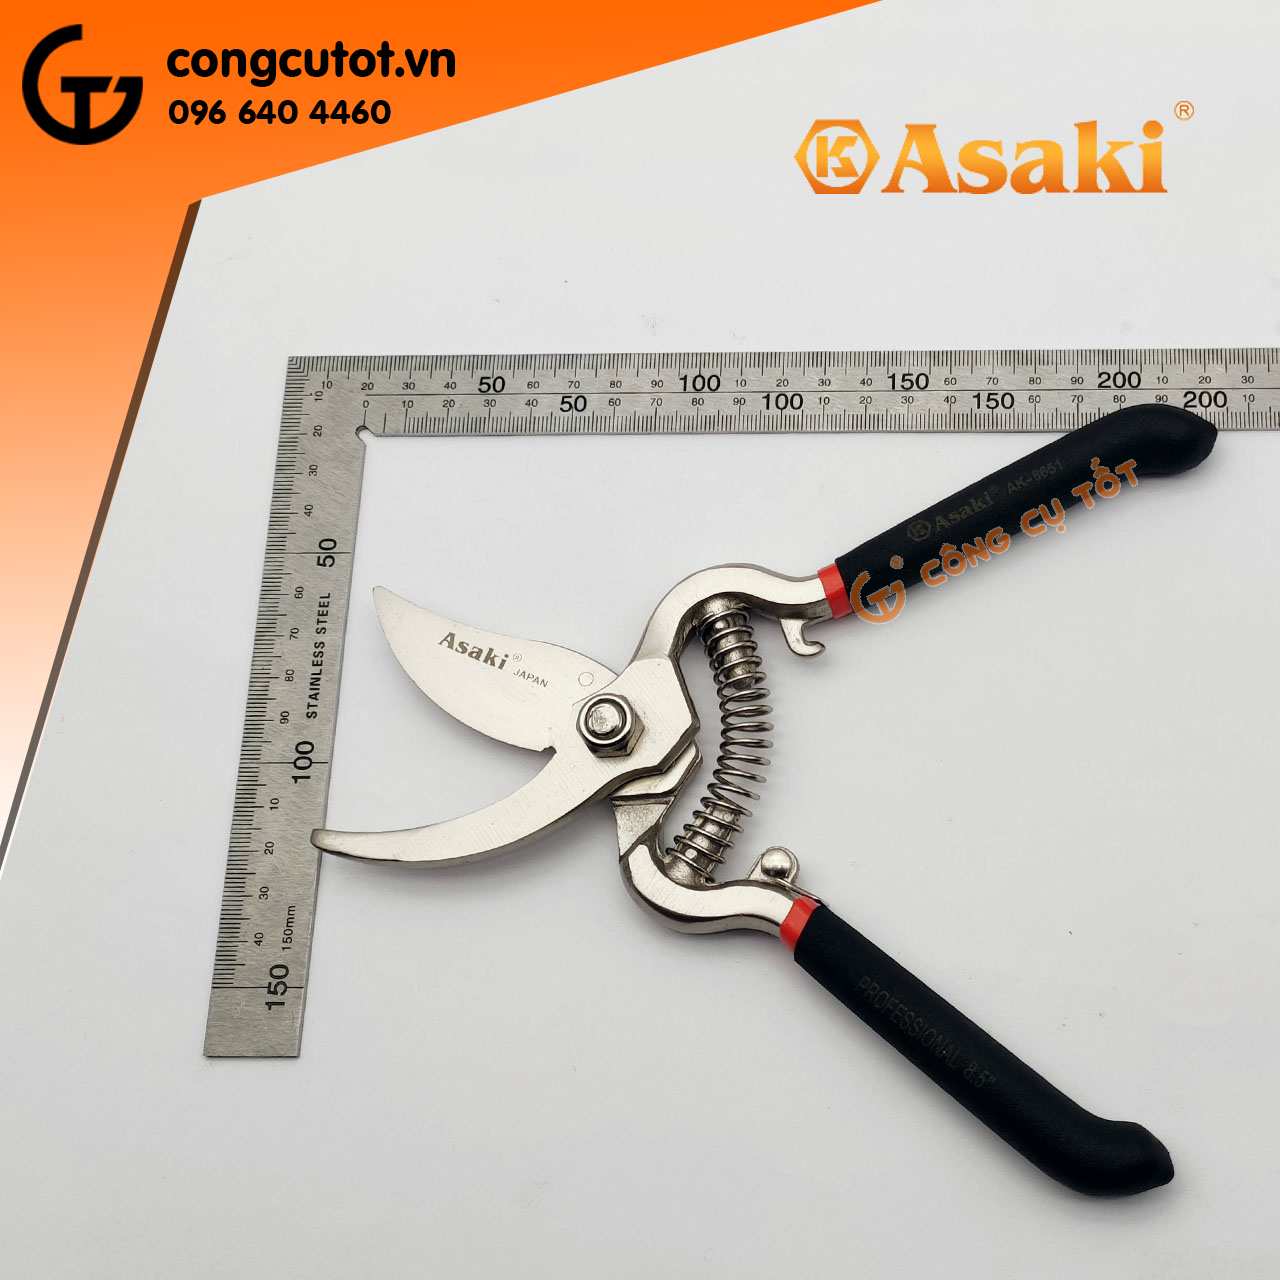 Kéo cắt cành Asaki AK-8651 kích cỡ